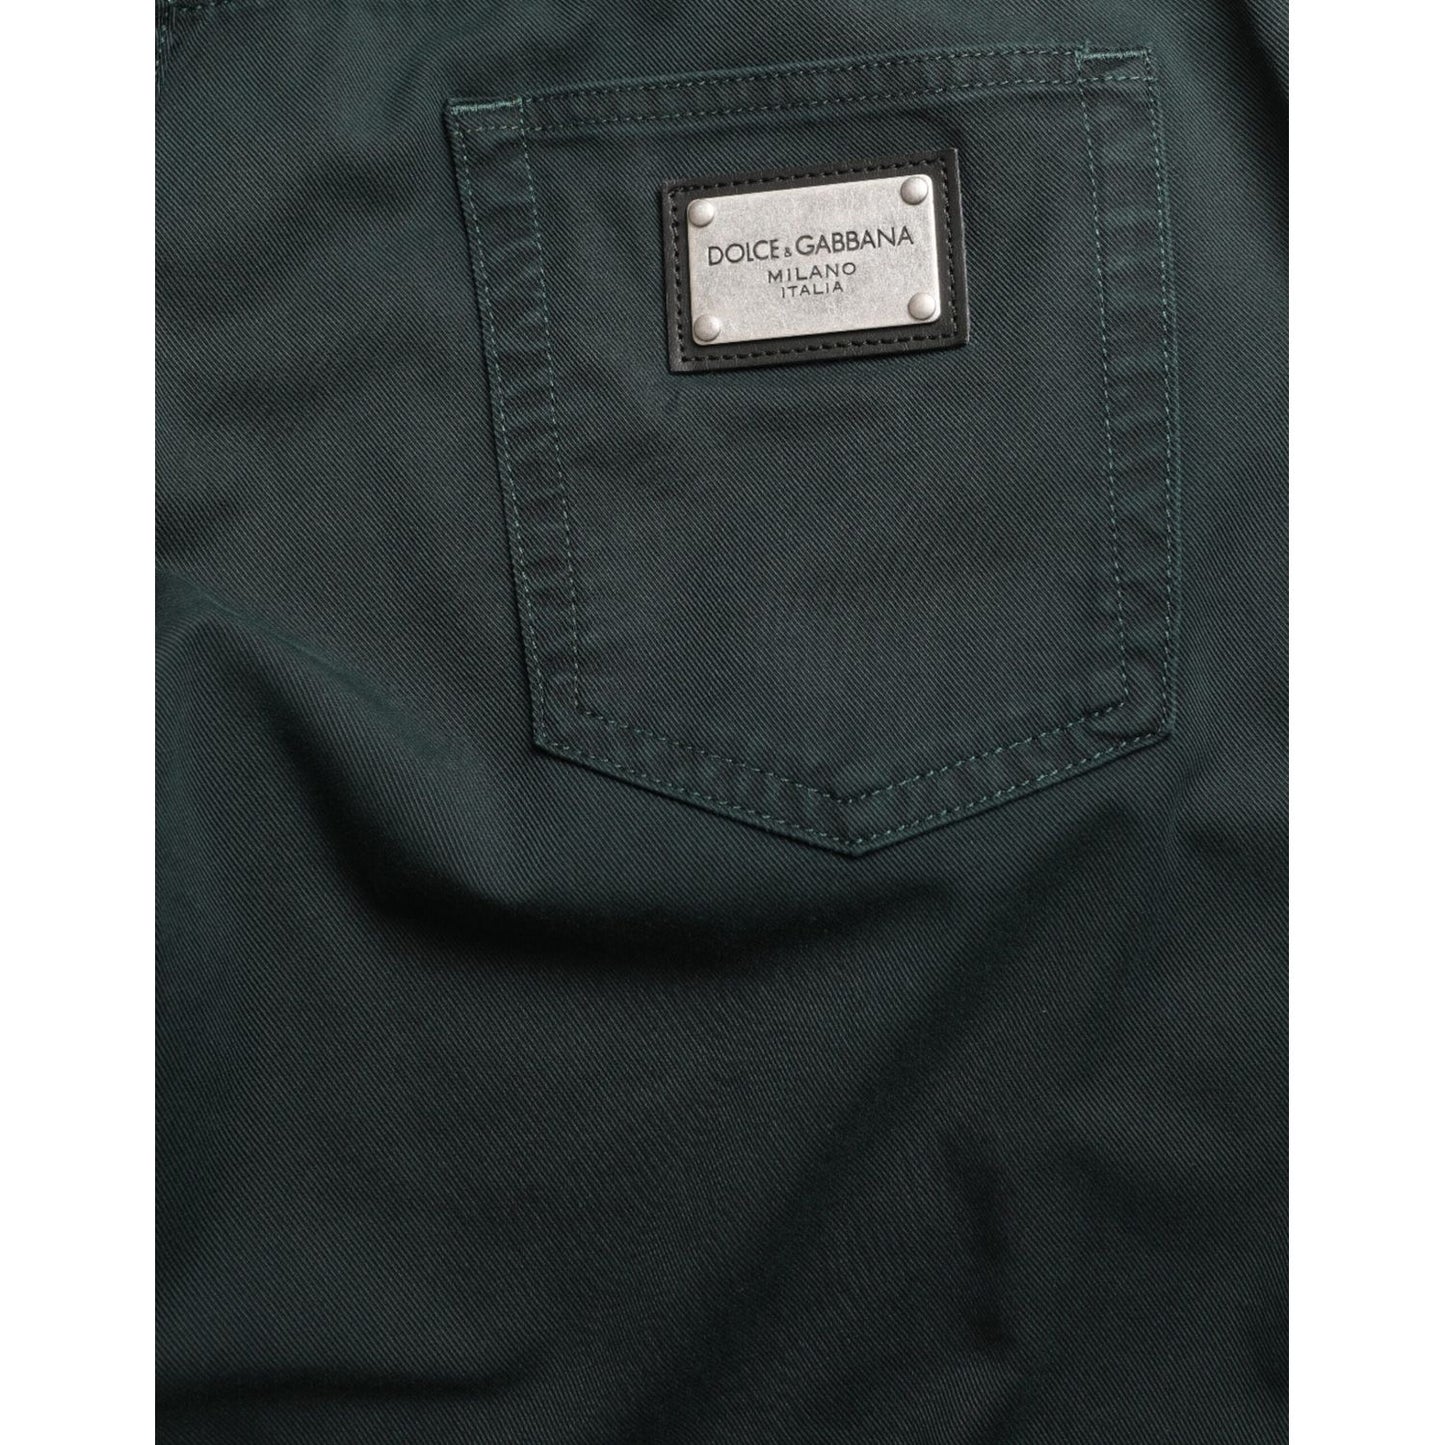 Dolce & Gabbana Green Cotton Stretch Skinny Men Denim Jeans green-cotton-stretch-skinny-men-denim-jeans 465A8411-BG-scaled-84b66633-7b6.jpg